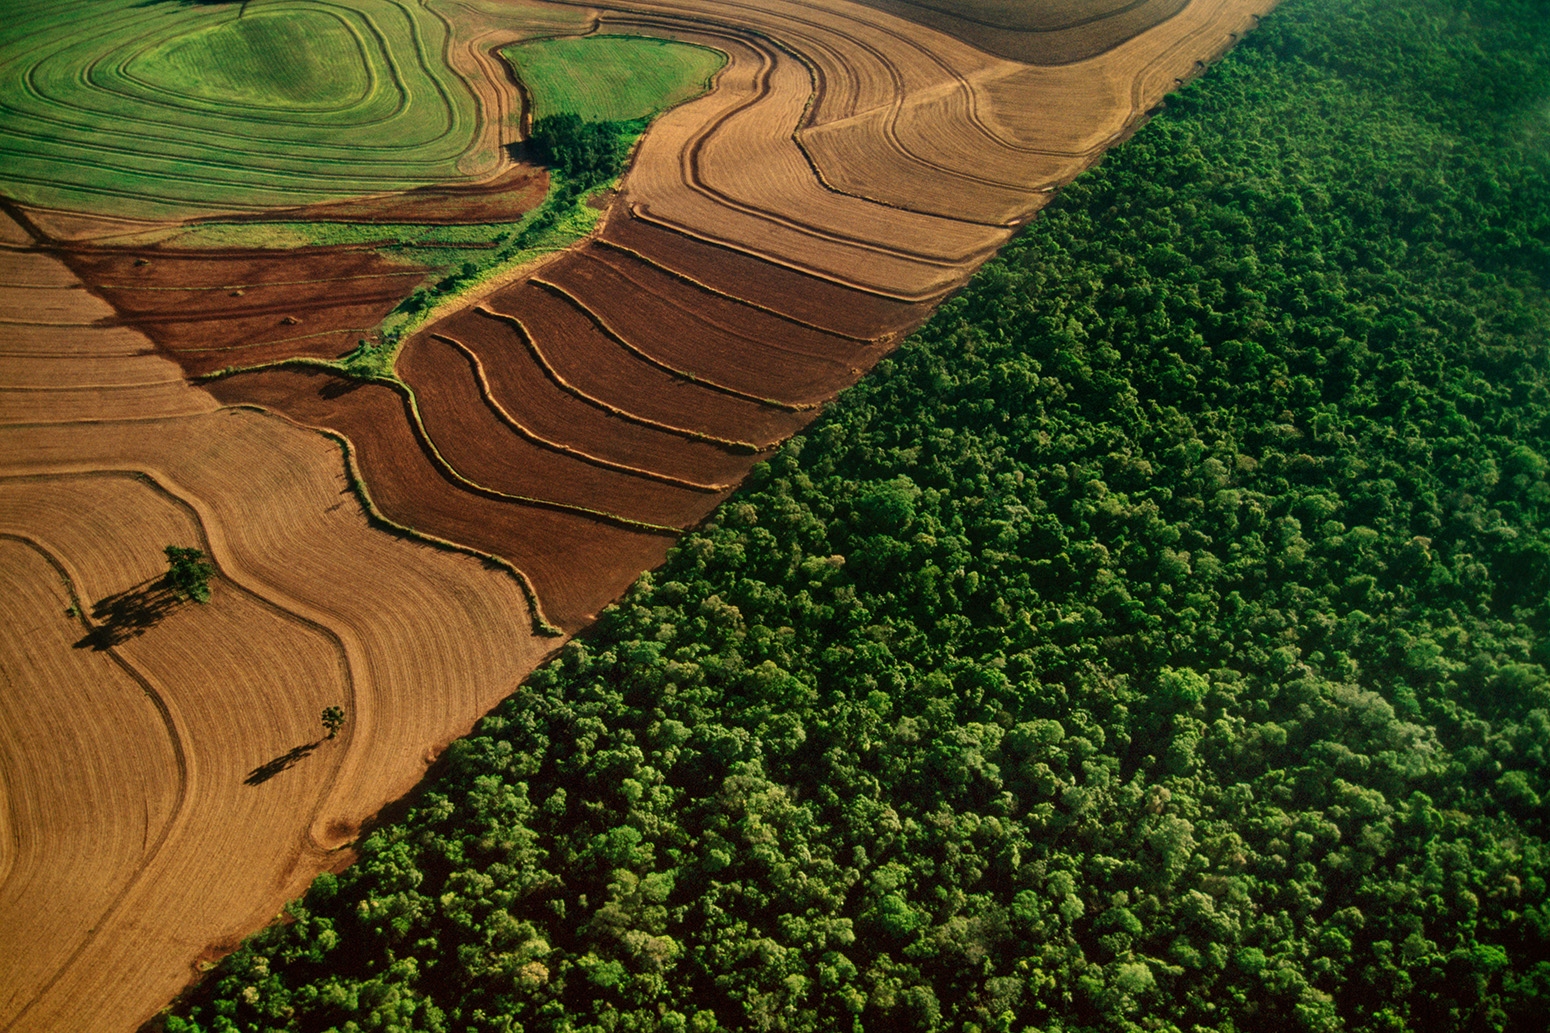 BFAE3H Cropland bordering rainforest habitat (aerial), Iguacu National Park, Brazil. C